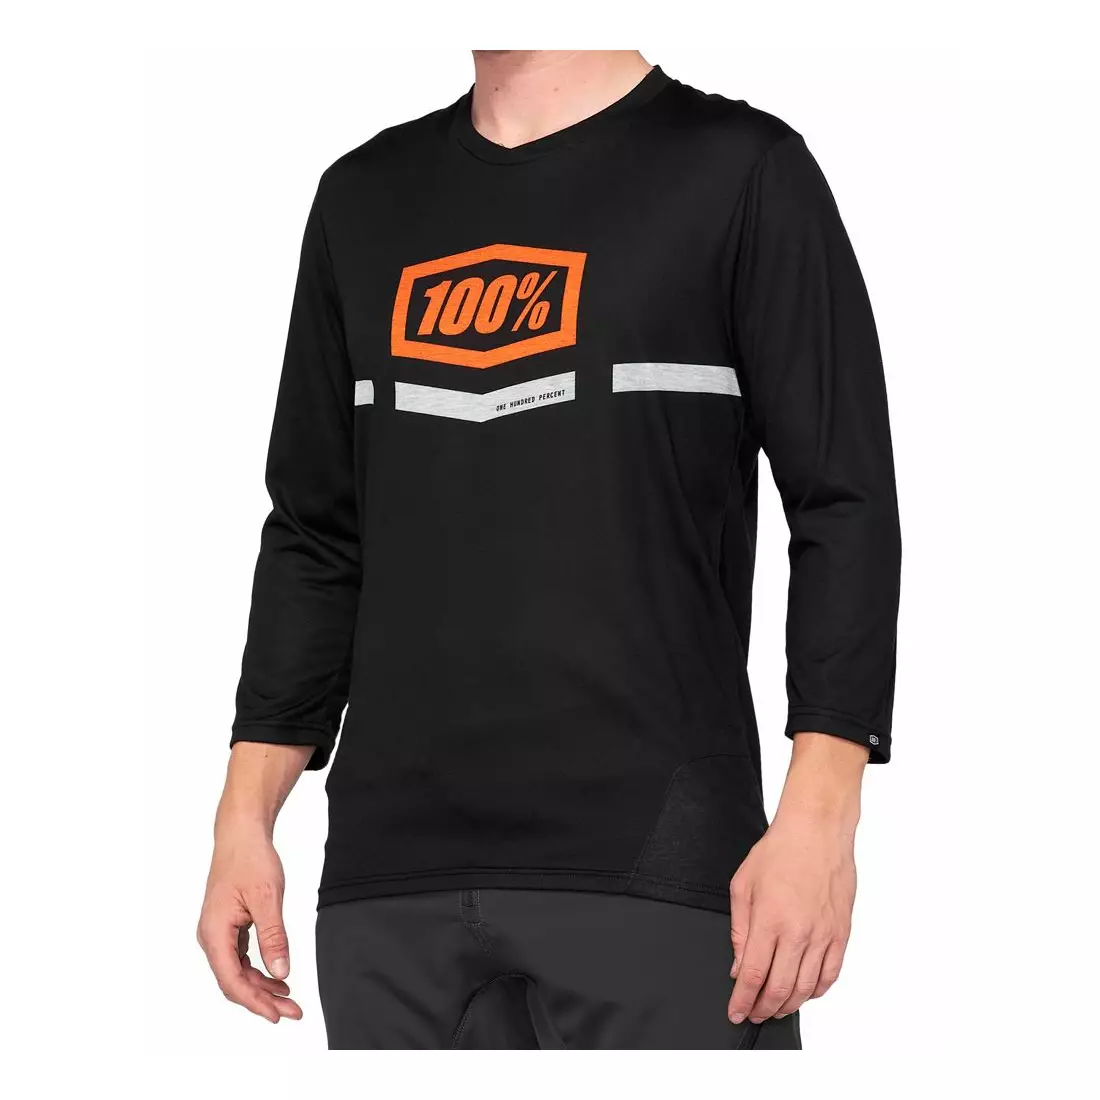 100% men's sleeve shirt 3/4 airmatic black orange STO-41313-260-10